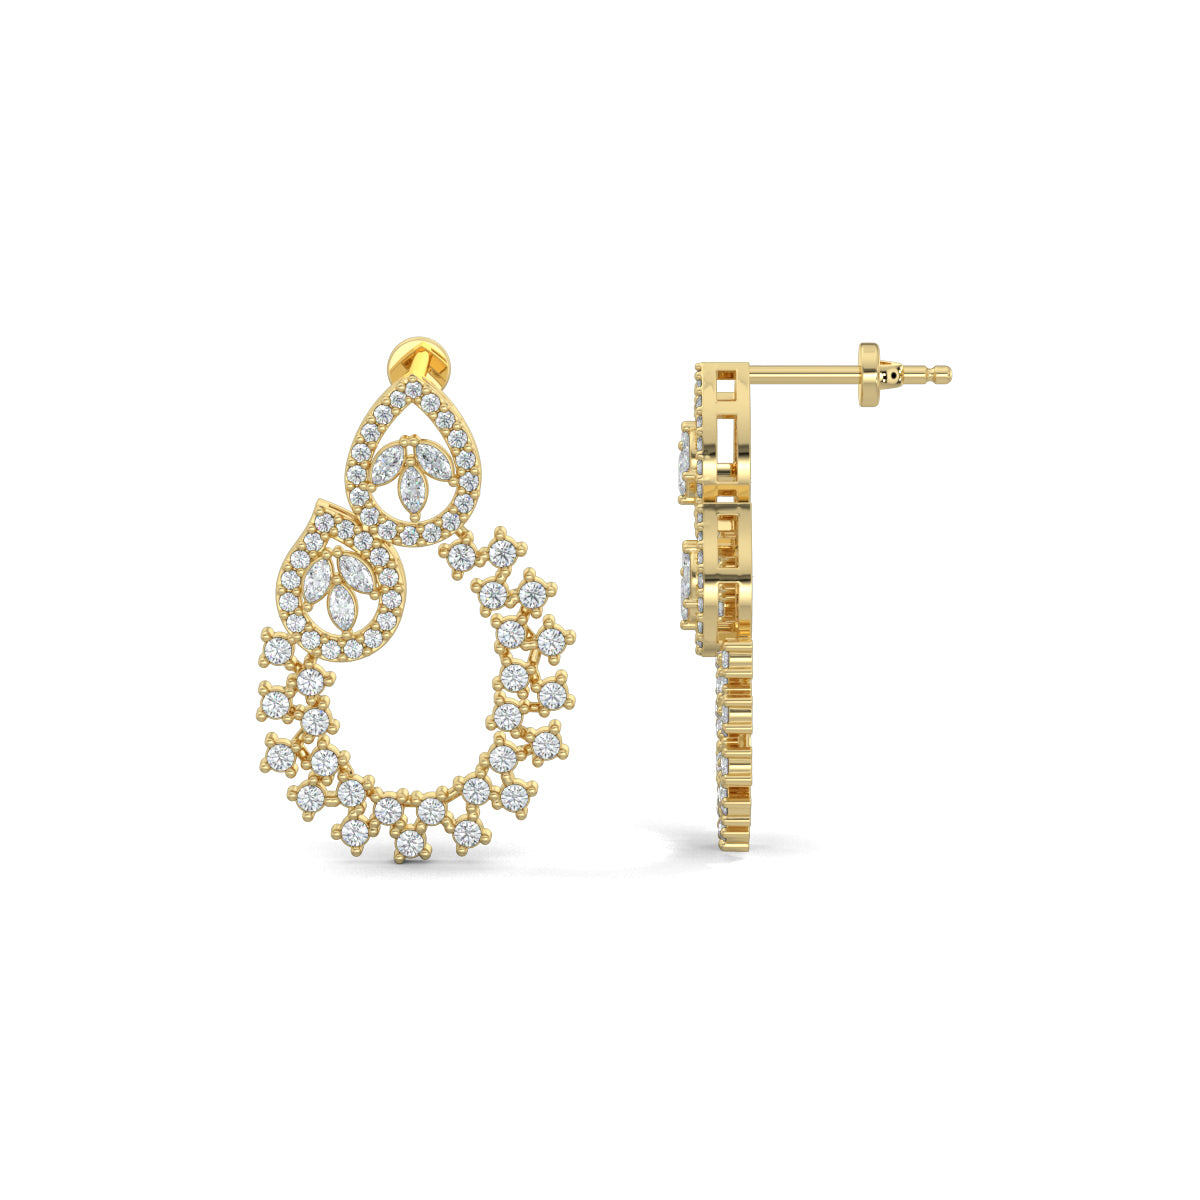 Yellow Gold, Diamond Earrings, Natural diamond earrings, Lab-grown diamond earrings, traditional design earrings, mid-length diamond earrings, pear-shaped diamonds, oval diamond earrings, marquise-cut diamonds, round diamonds, elegant diamond jewelry